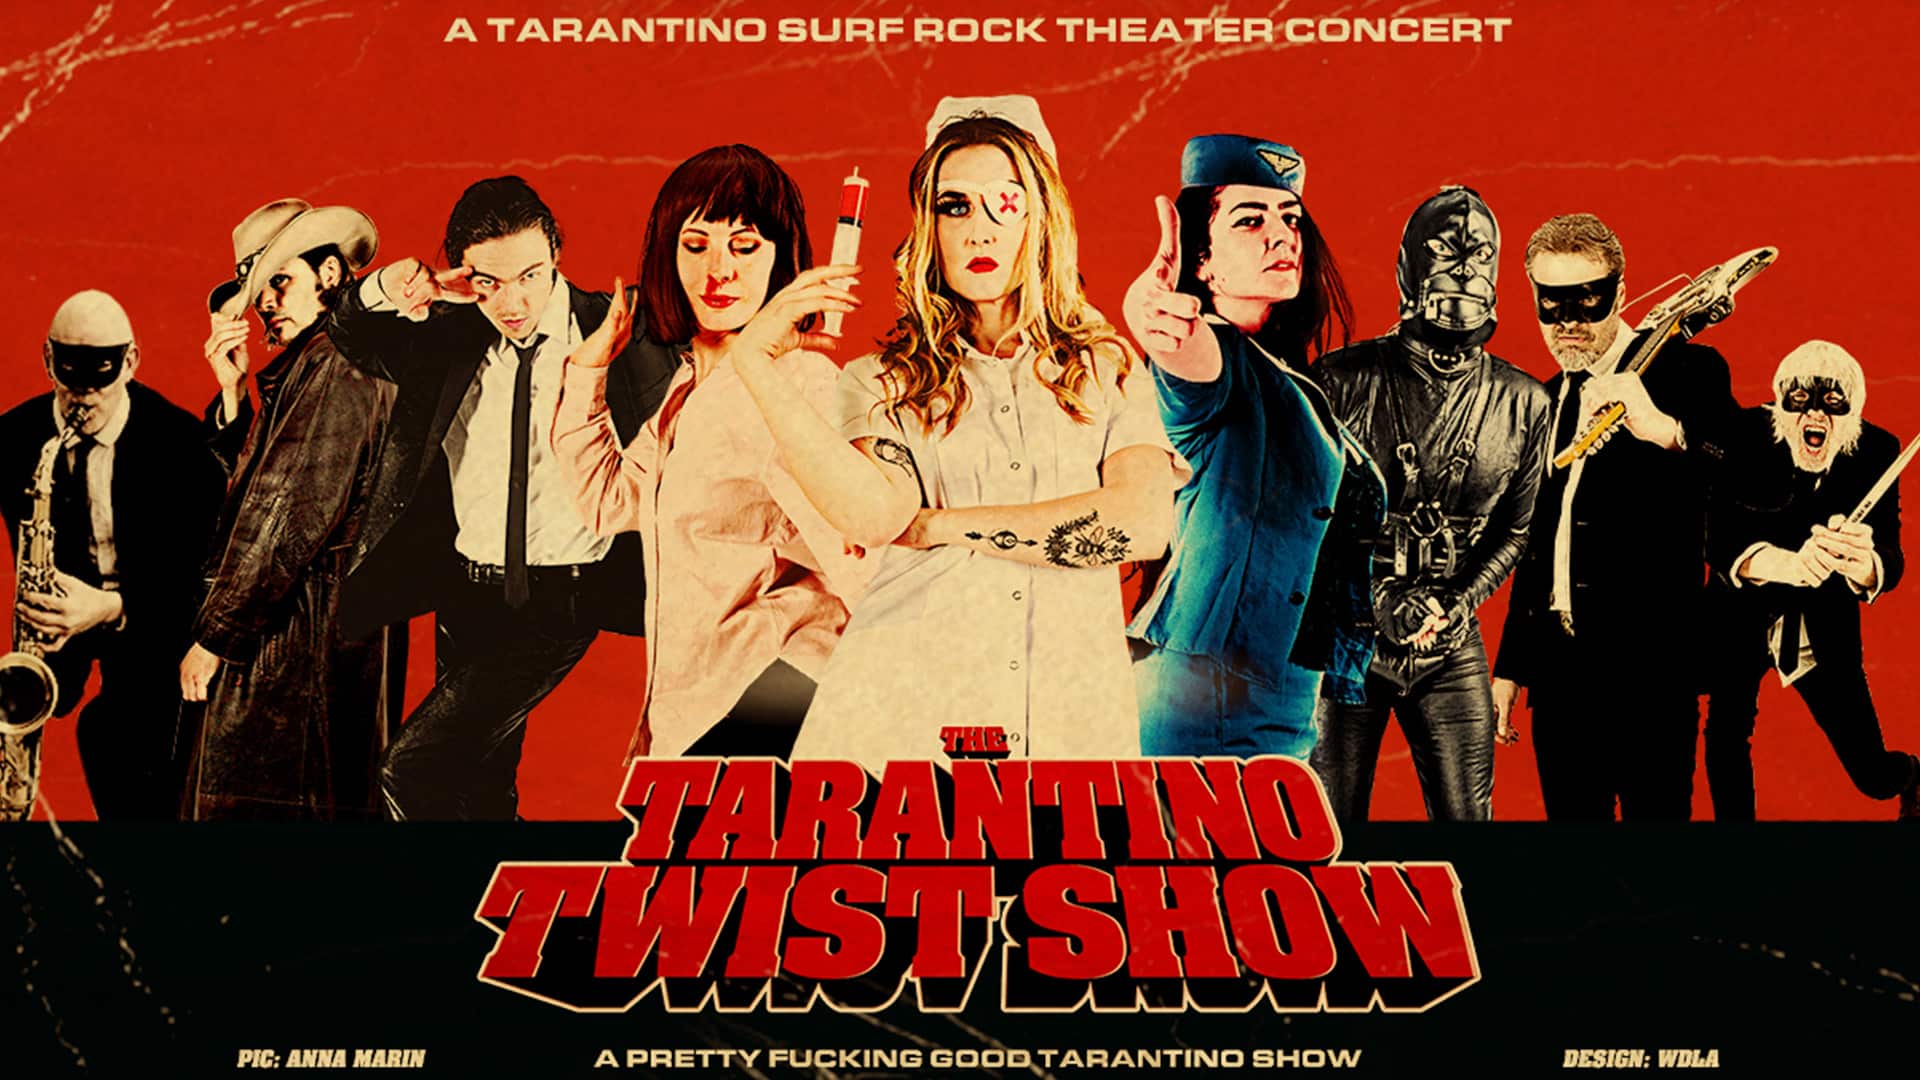 The Tarantino Twist Show